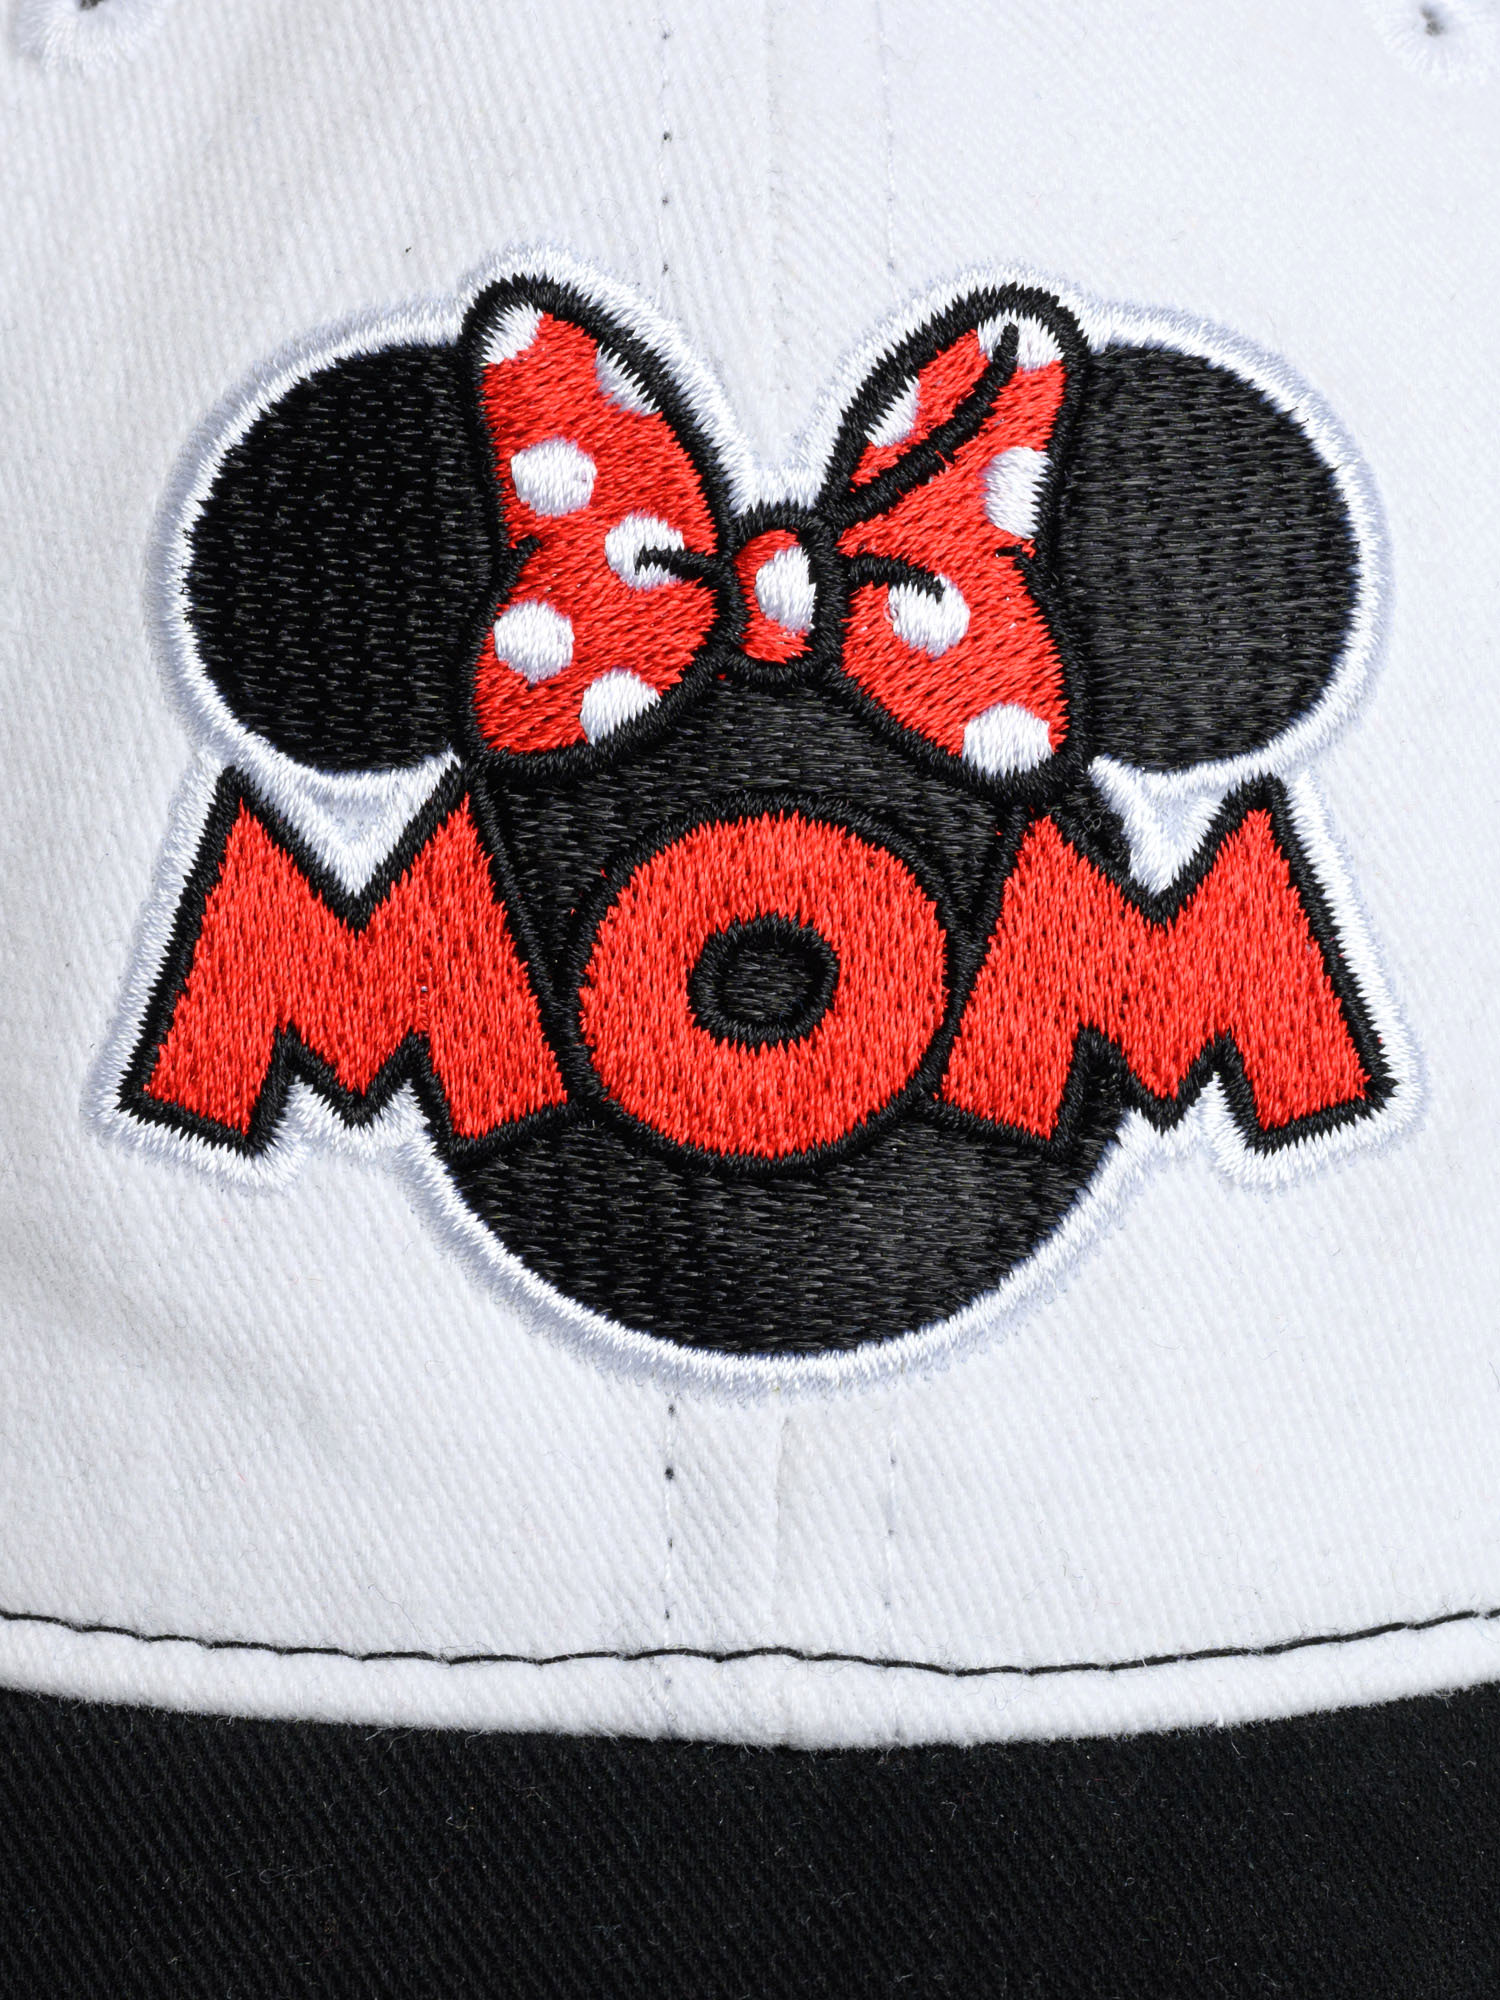 Disney Women's Minnie Mouse Hat Mom Baseball Cap Black White Red